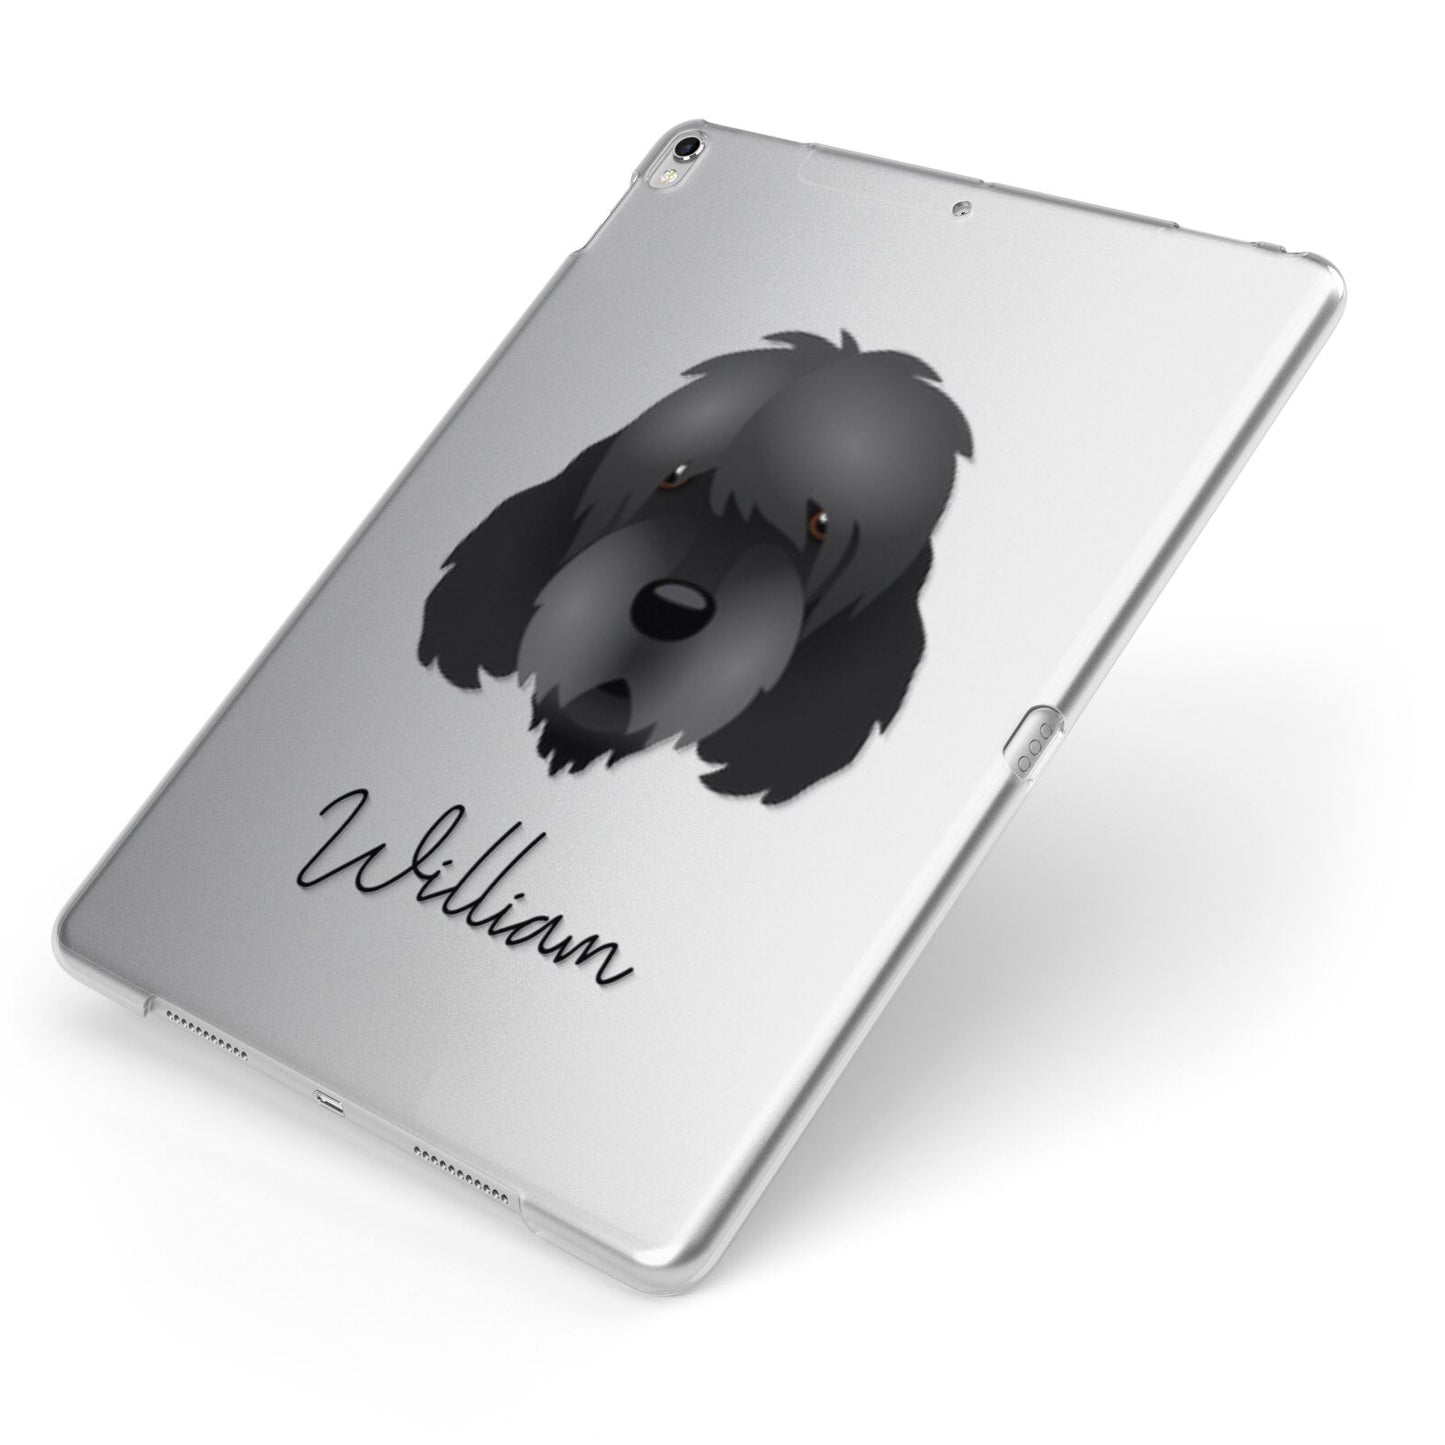 Otterhound Personalised Apple iPad Case on Silver iPad Side View